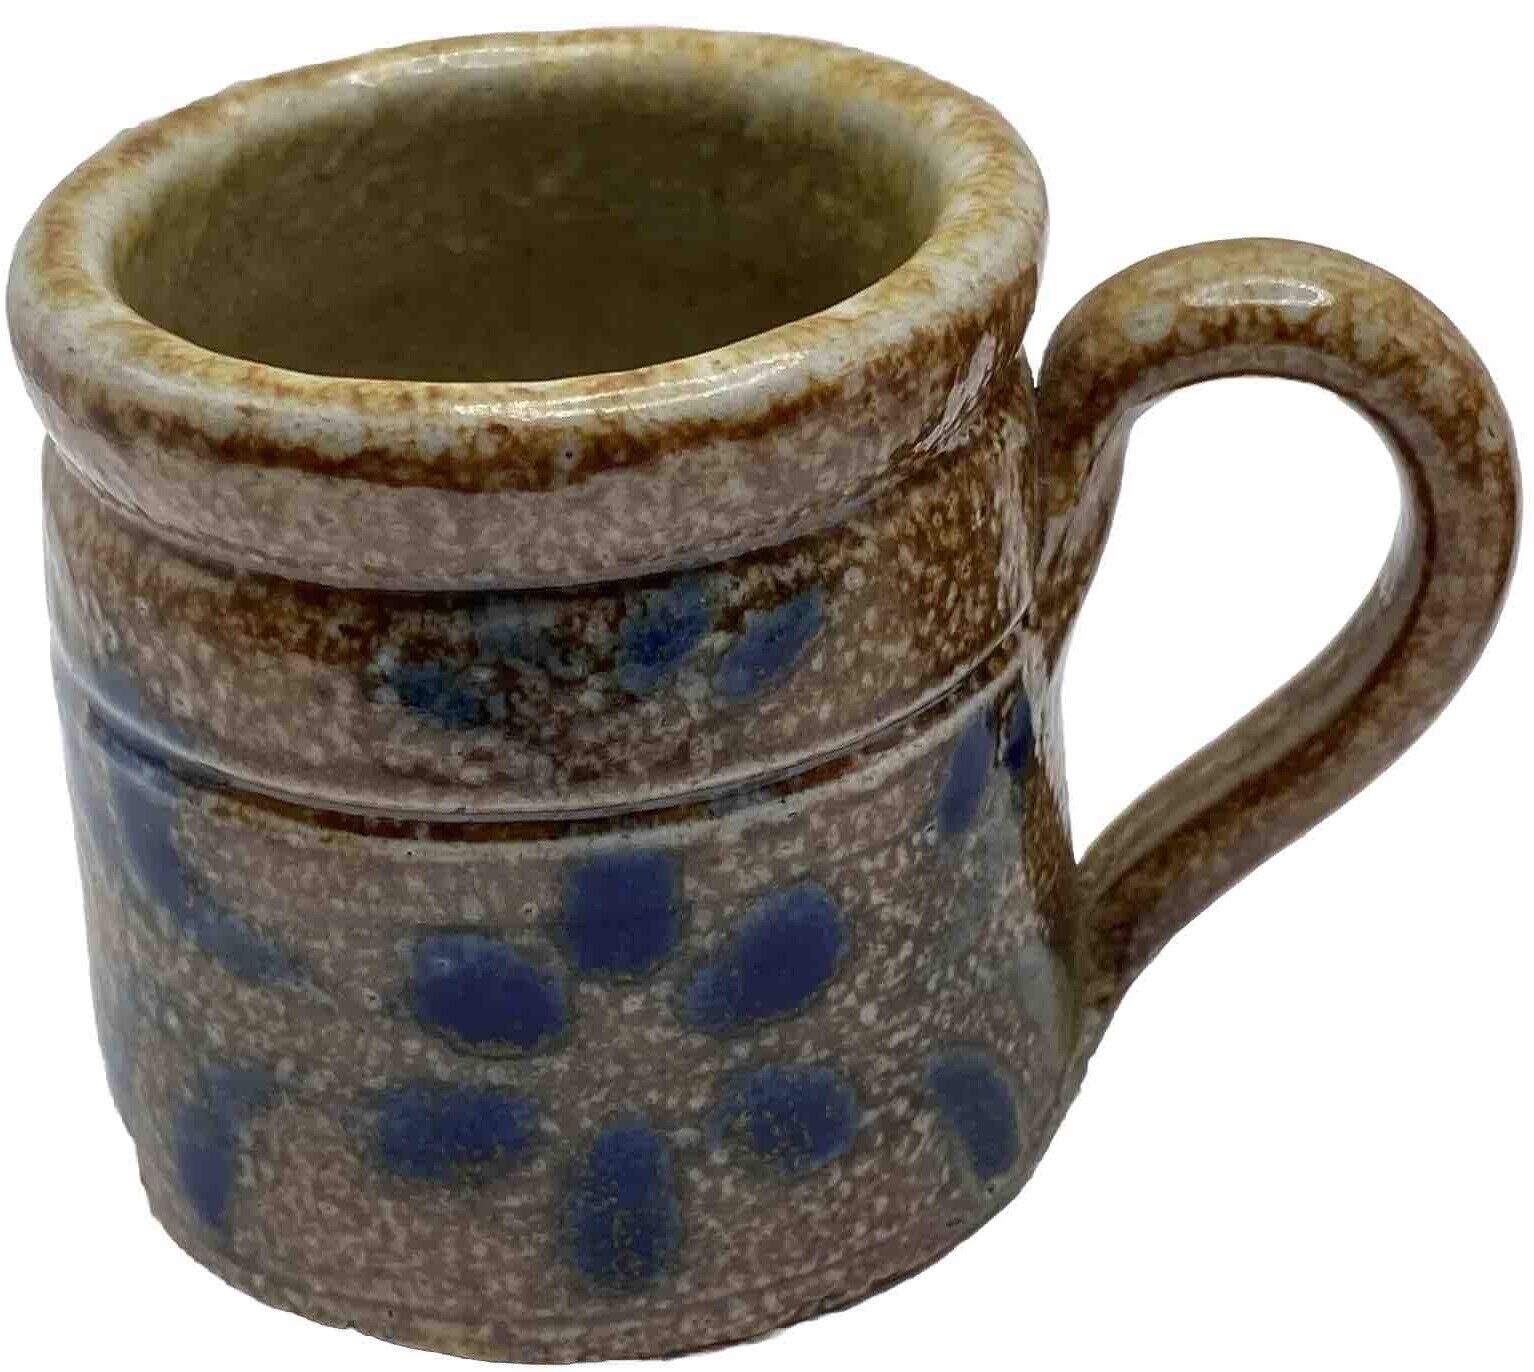 Antique Stoneware Mugs Handcrafted Glazed Pottery Mugs Lot Of 2 19th Century